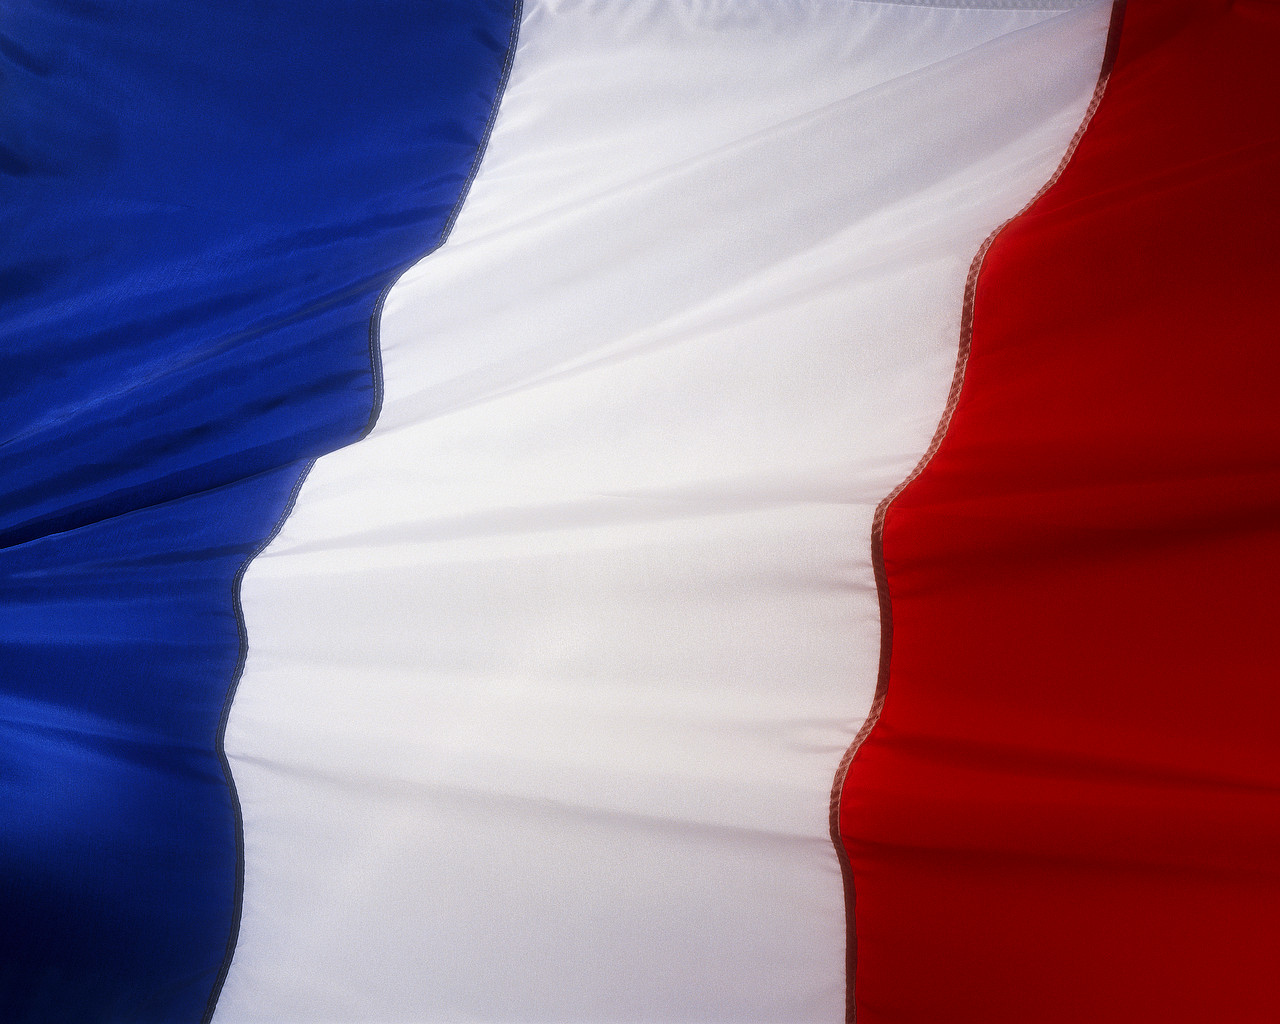 http://4.bp.blogspot.com/-3kld5yxU_Ys/TchsB1SahqI/AAAAAAAAAww/SKiHb2Ak1Kg/s1600/Wallpapers+Flag+of+France+%25284%2529.jpg